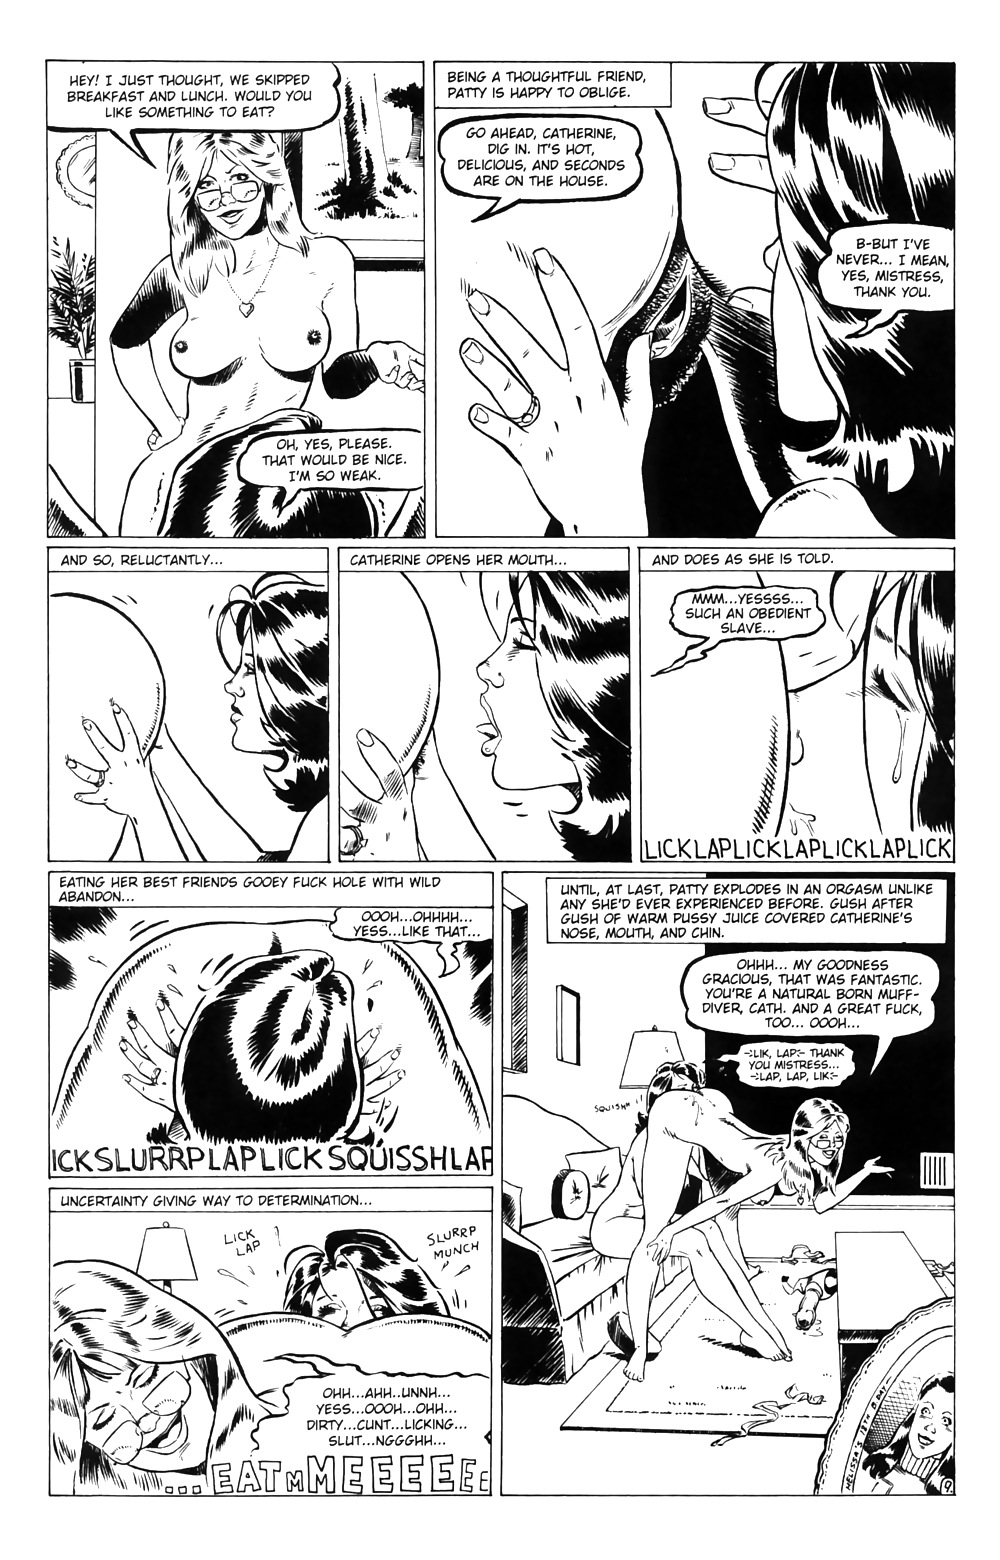 Hausfrauen Am Spiel # 01 - Eros-Comics Von Rebecca - April 2002 #36196513